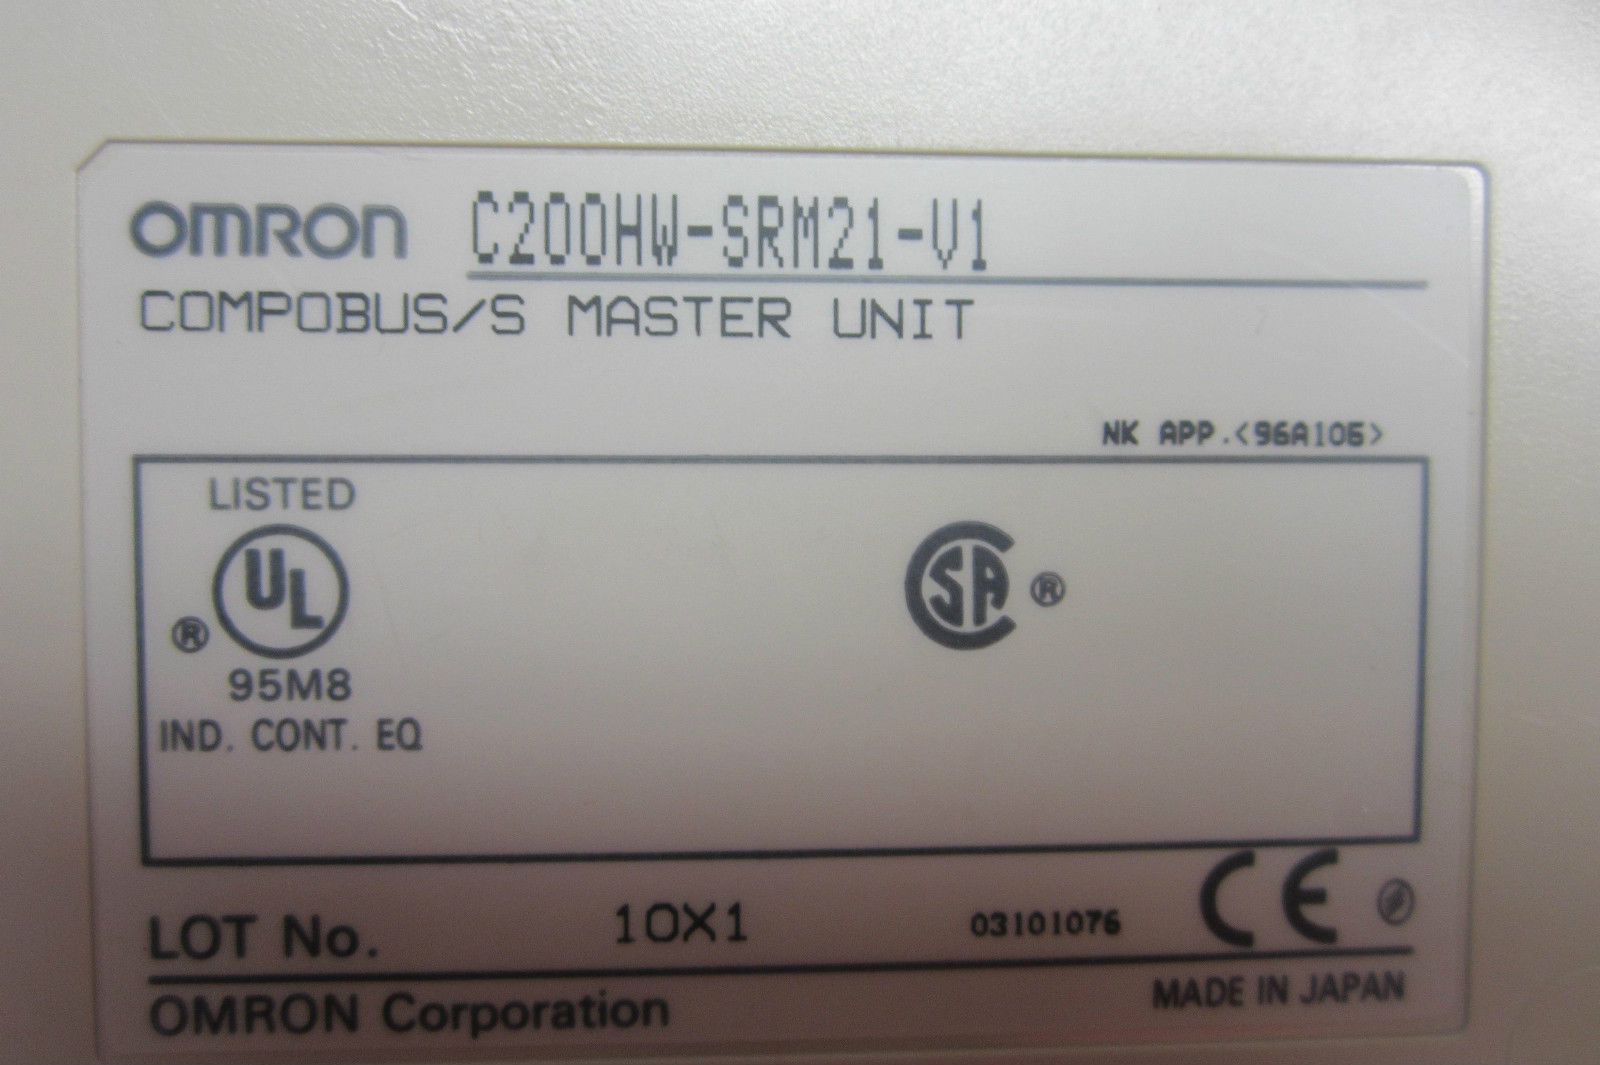 C200HWSRM21V1 USED OMRON C200HW-SRM21-V1 Compobus/S Master Unit 